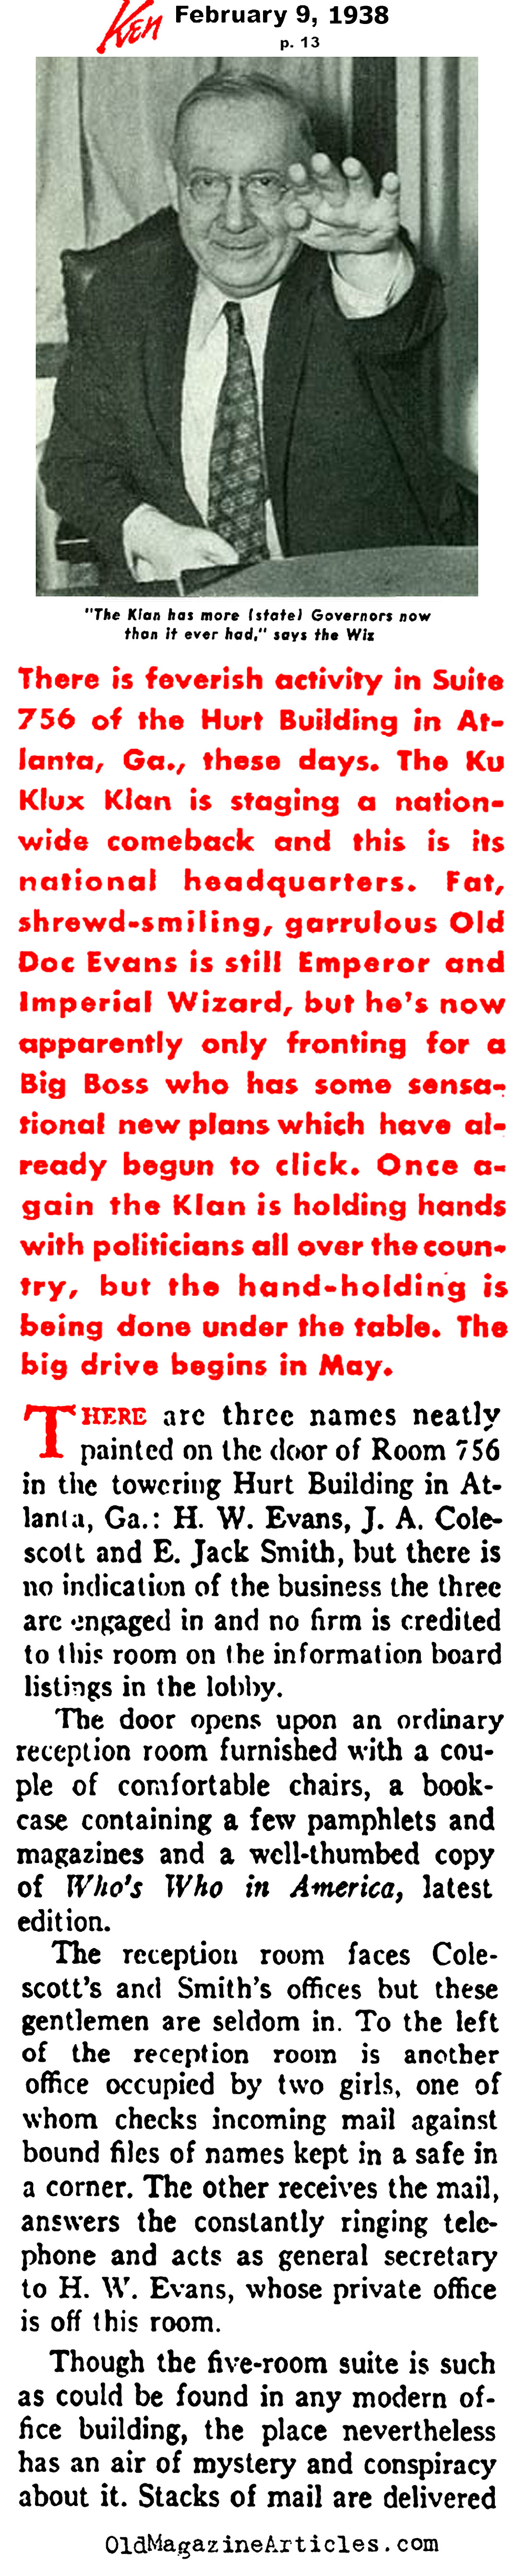 The Imperial Wizard (Ken Magazine, 1938)